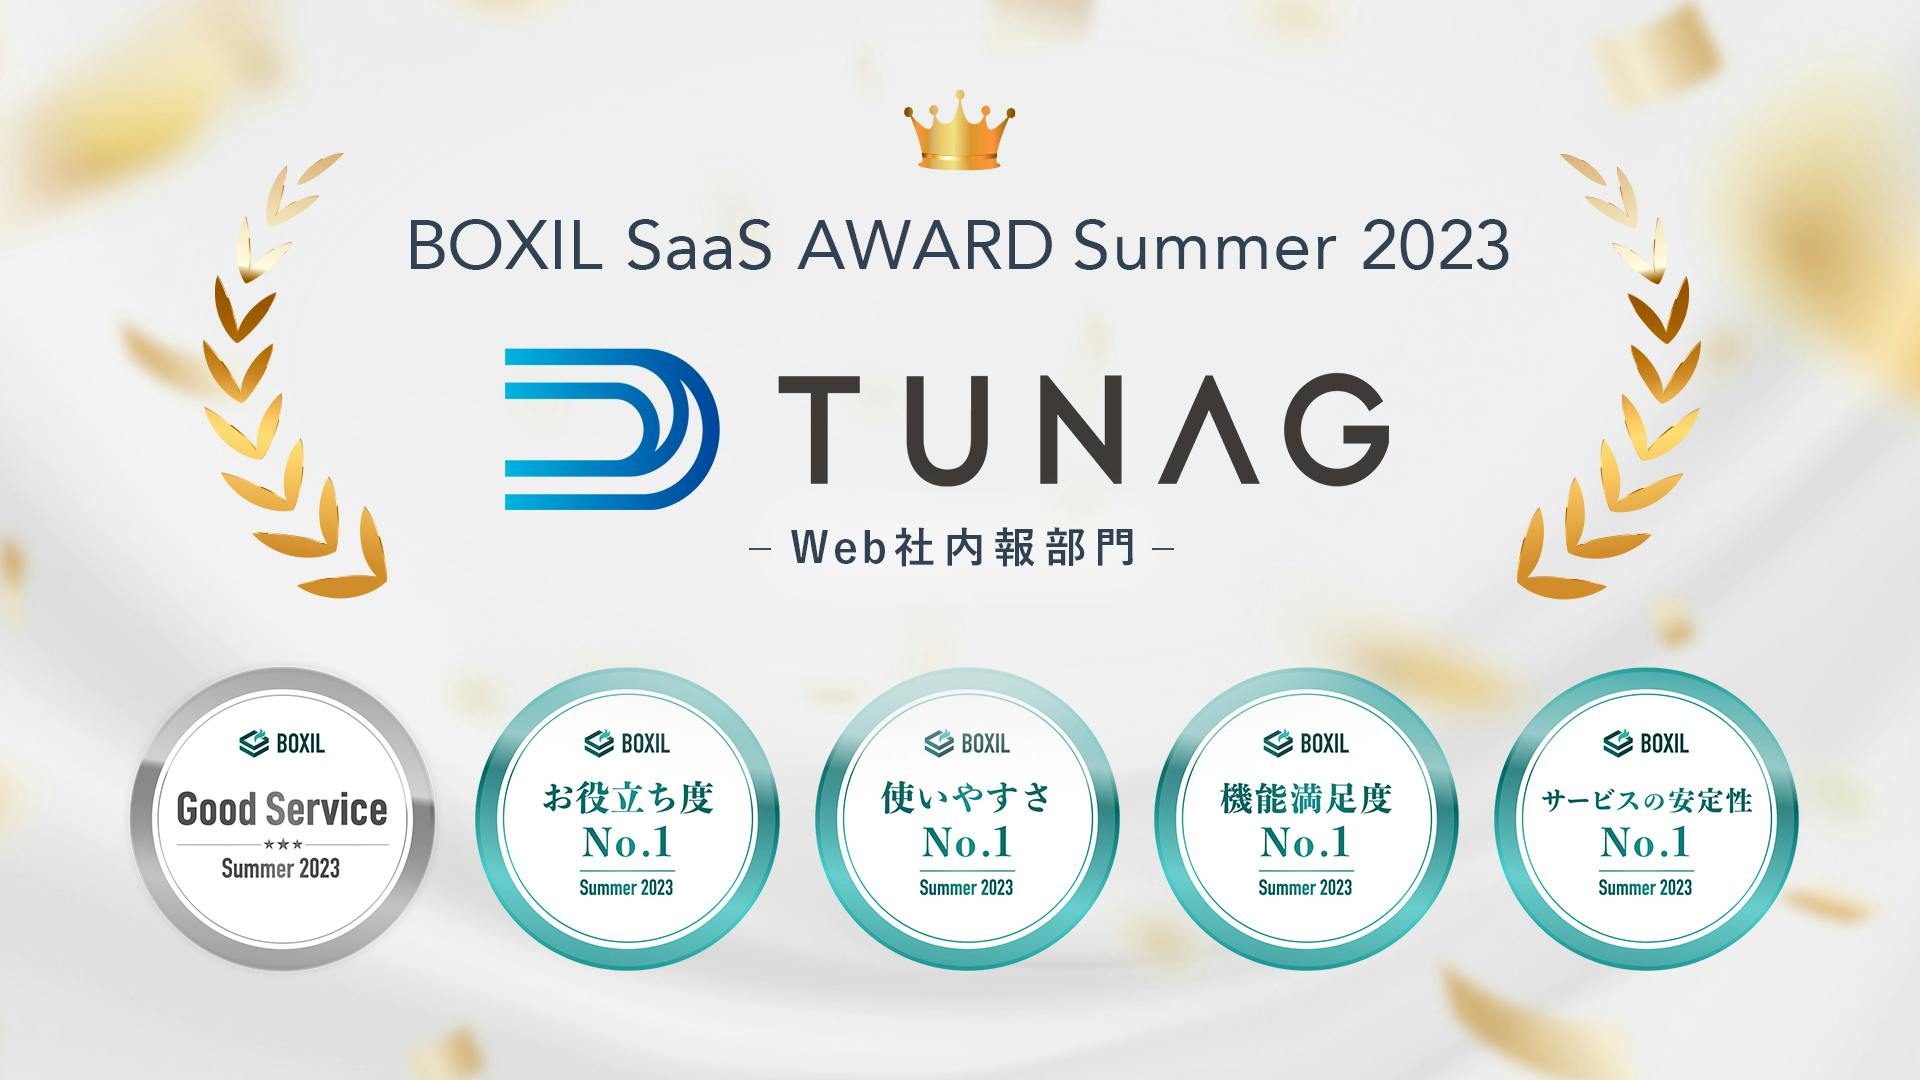 「BOXIL SaaS AWARD Summer 2023」のWeb社内報部門で「Good Service」ほか4つのNo.1を受賞